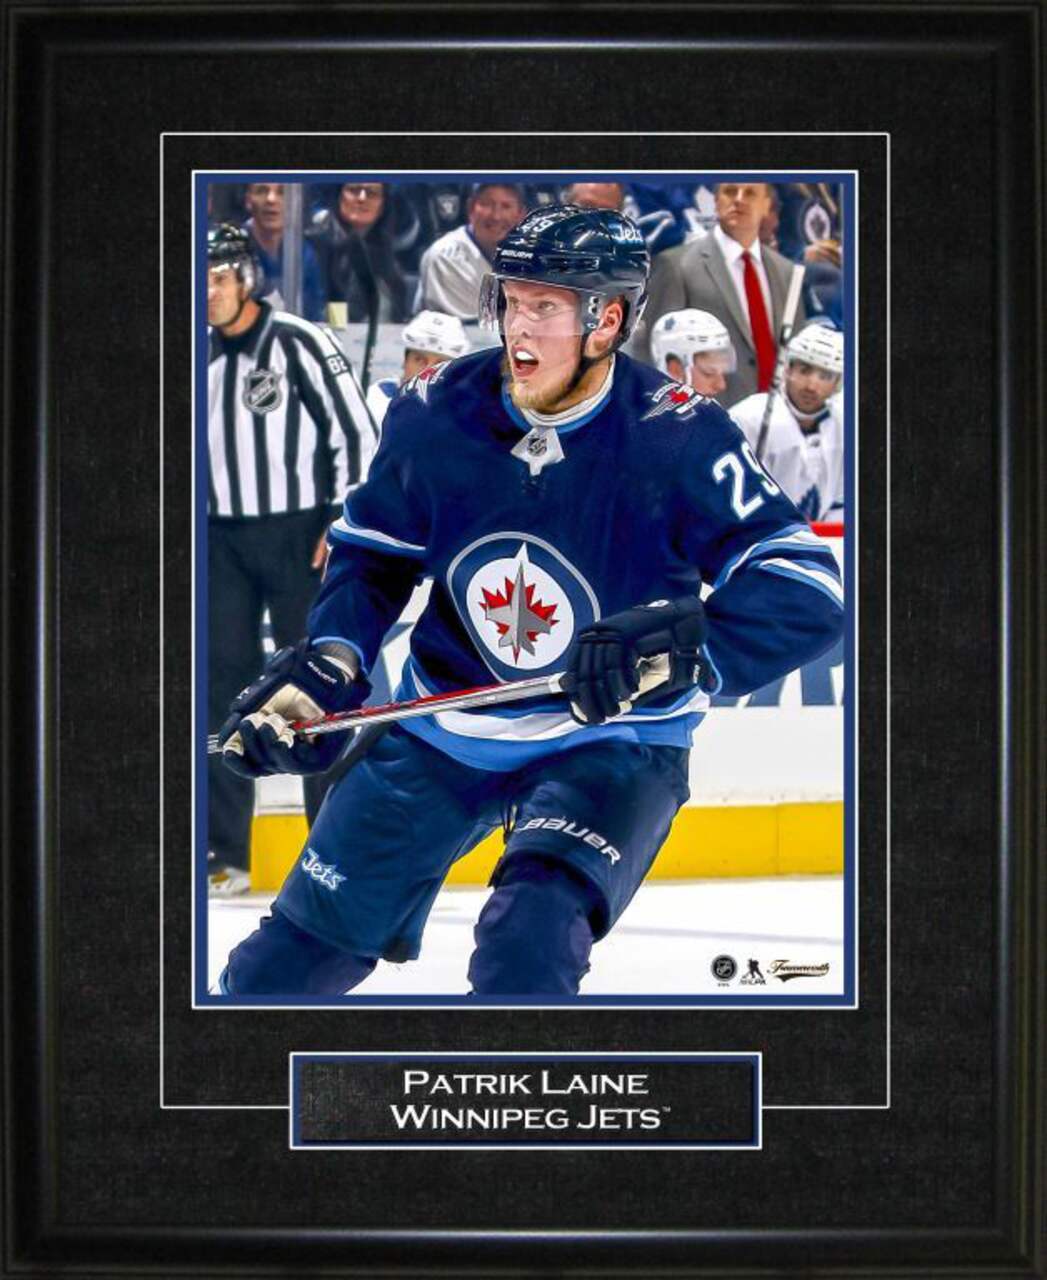 Winnipeg Jets' Patrik Laine once again recognized by NHL - Winnipeg